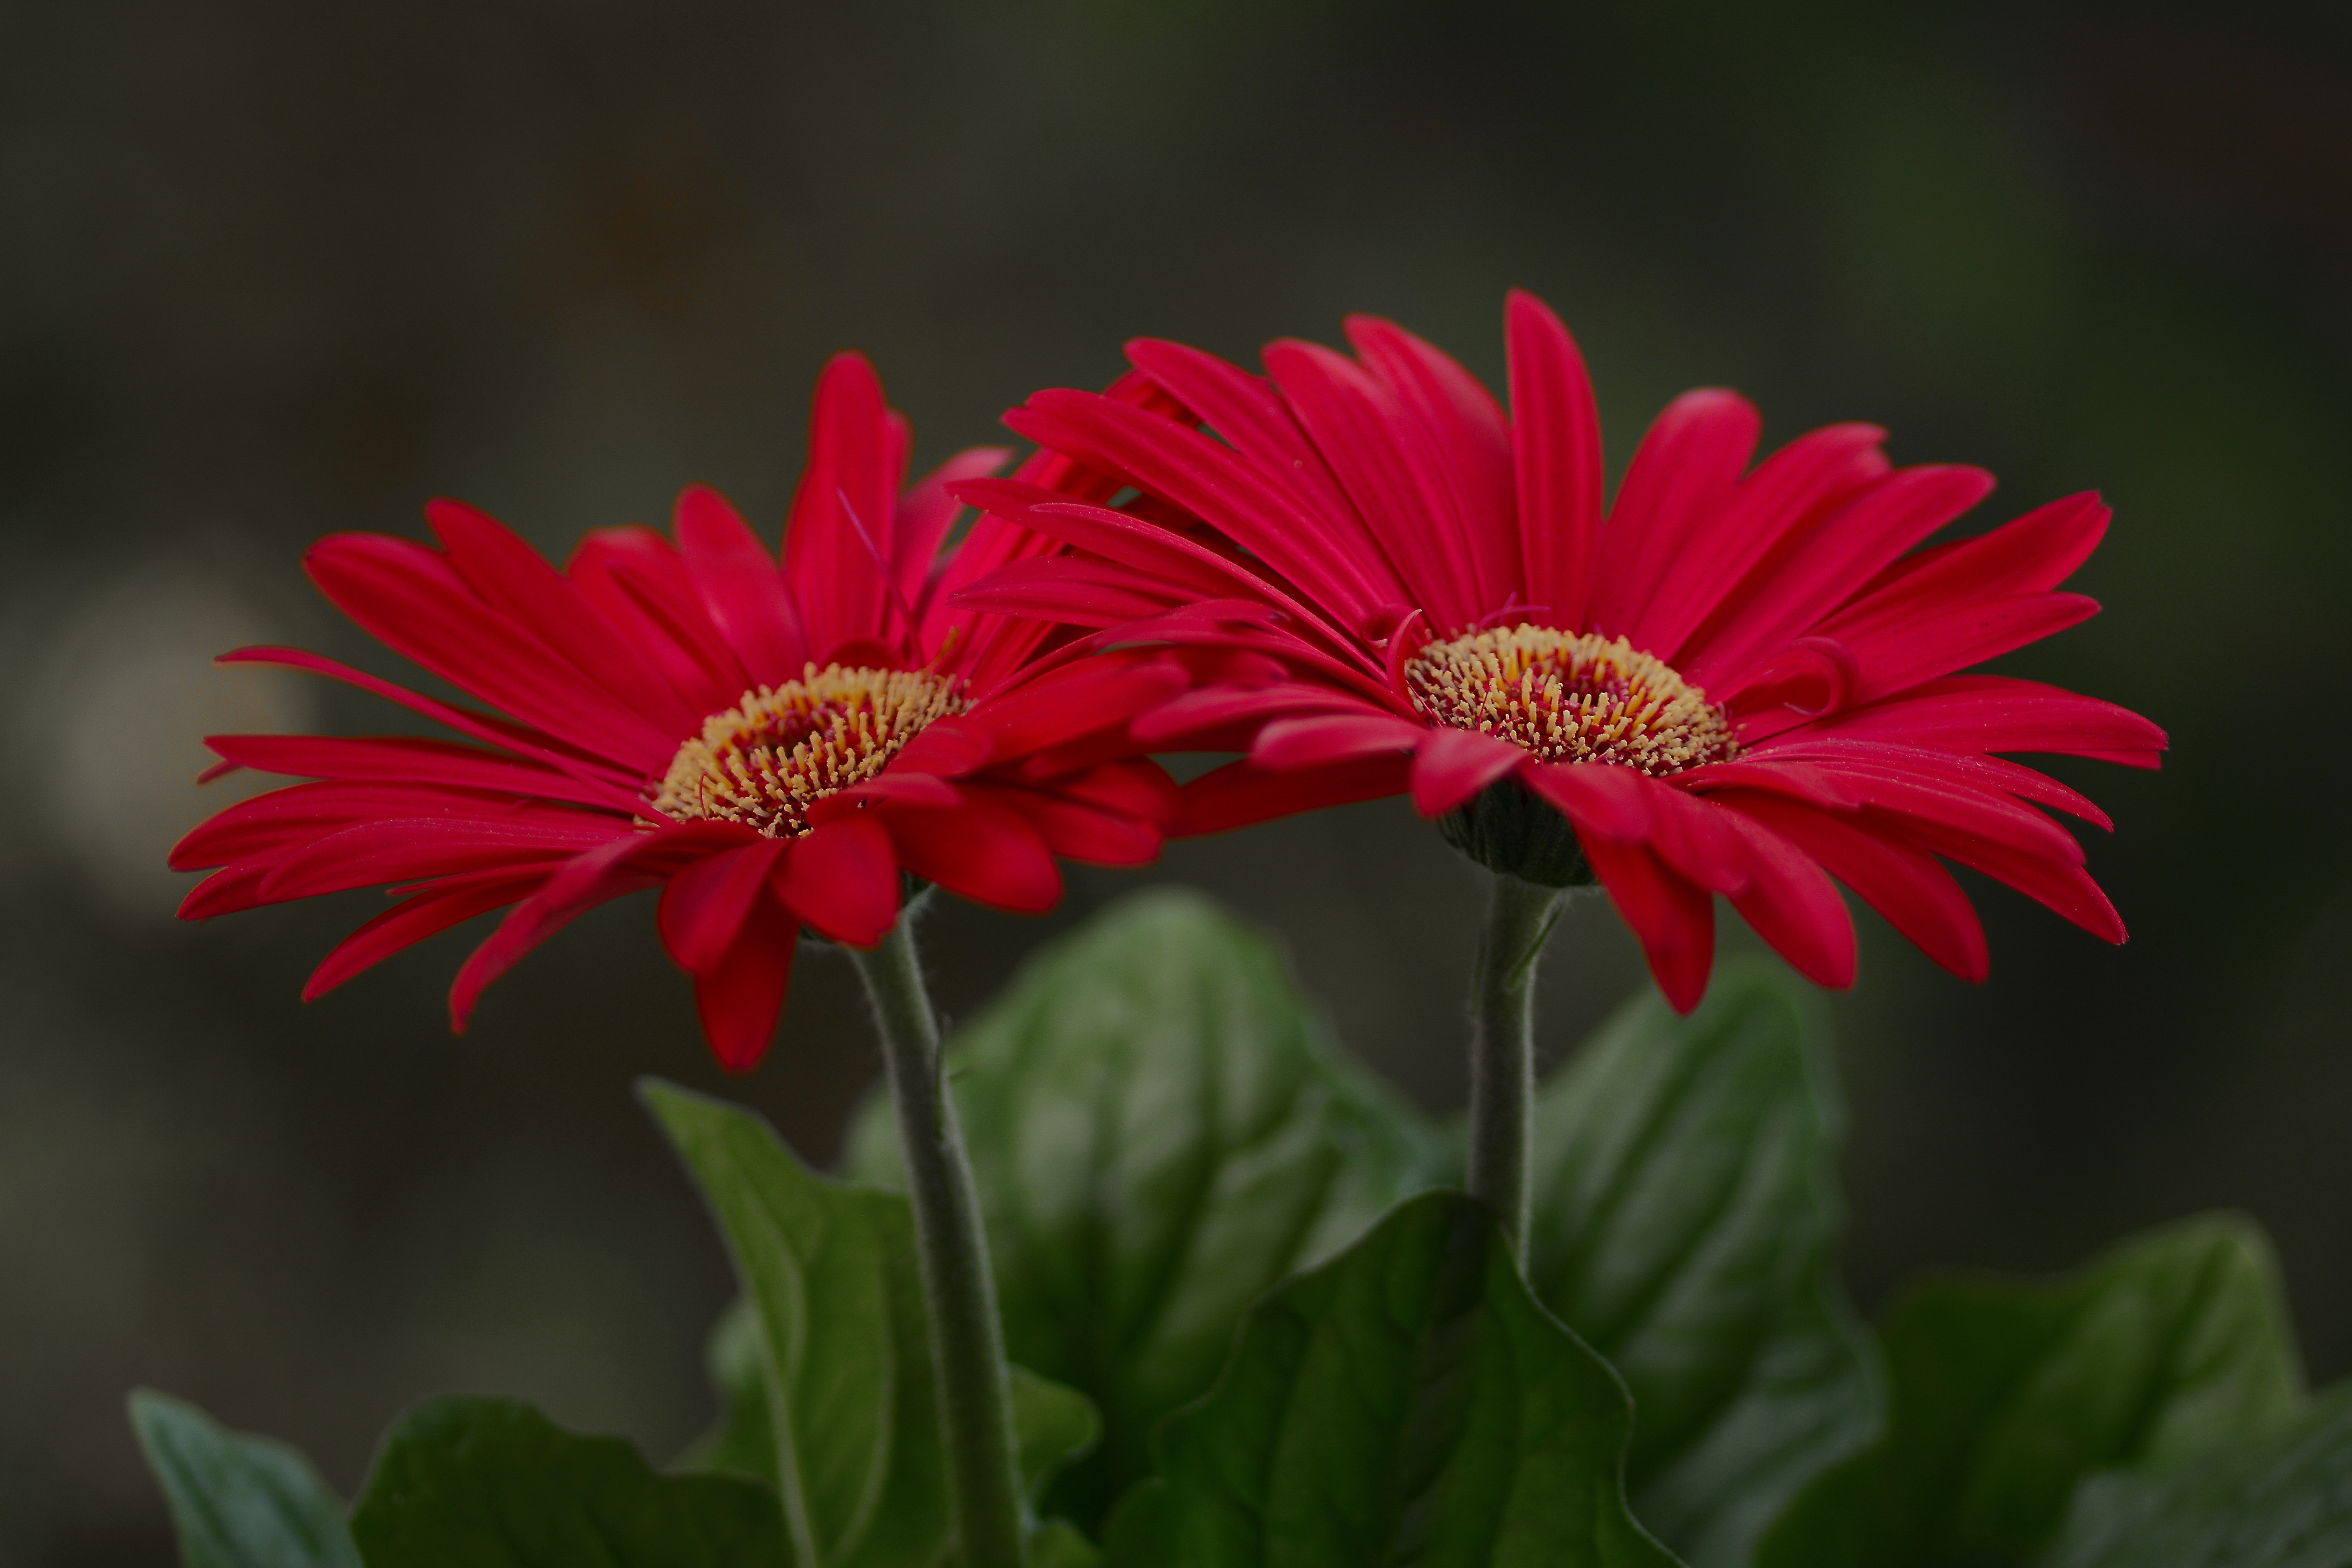 Download wallpaper 938x1668 gerbera flower blur stem iphone 876s6 for  parallax hd background